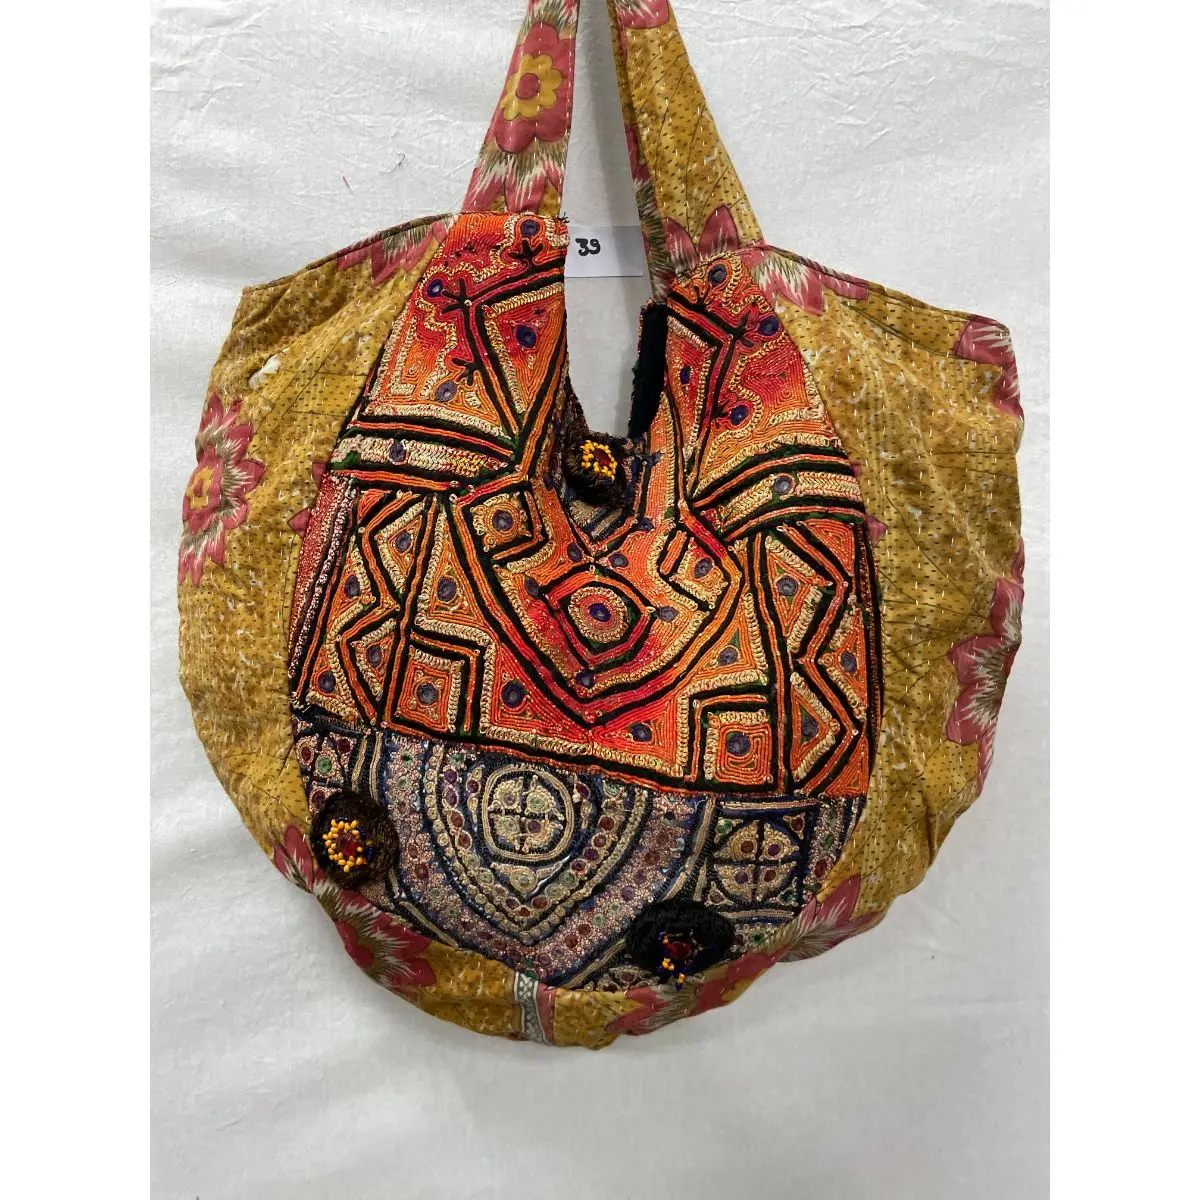 Ethnic Indian Handmade Banjara Cotton Hobo Boho Women Fashion Purse  Shoulder Bag